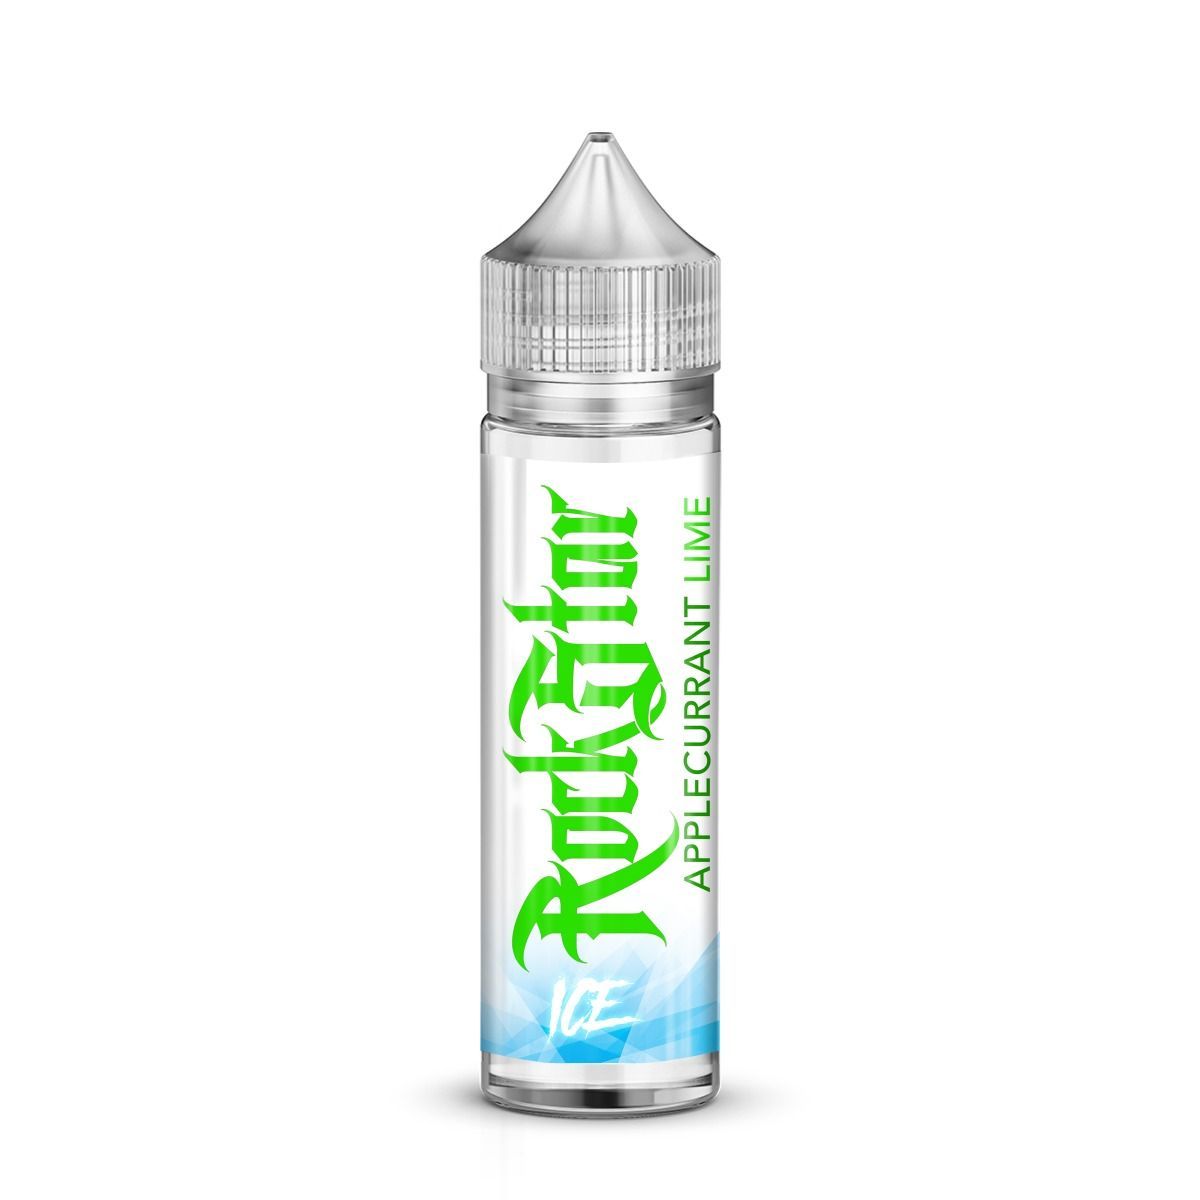 Applecurrant Lime Ice E-Liquid by Rockstar 50ml Shortfill